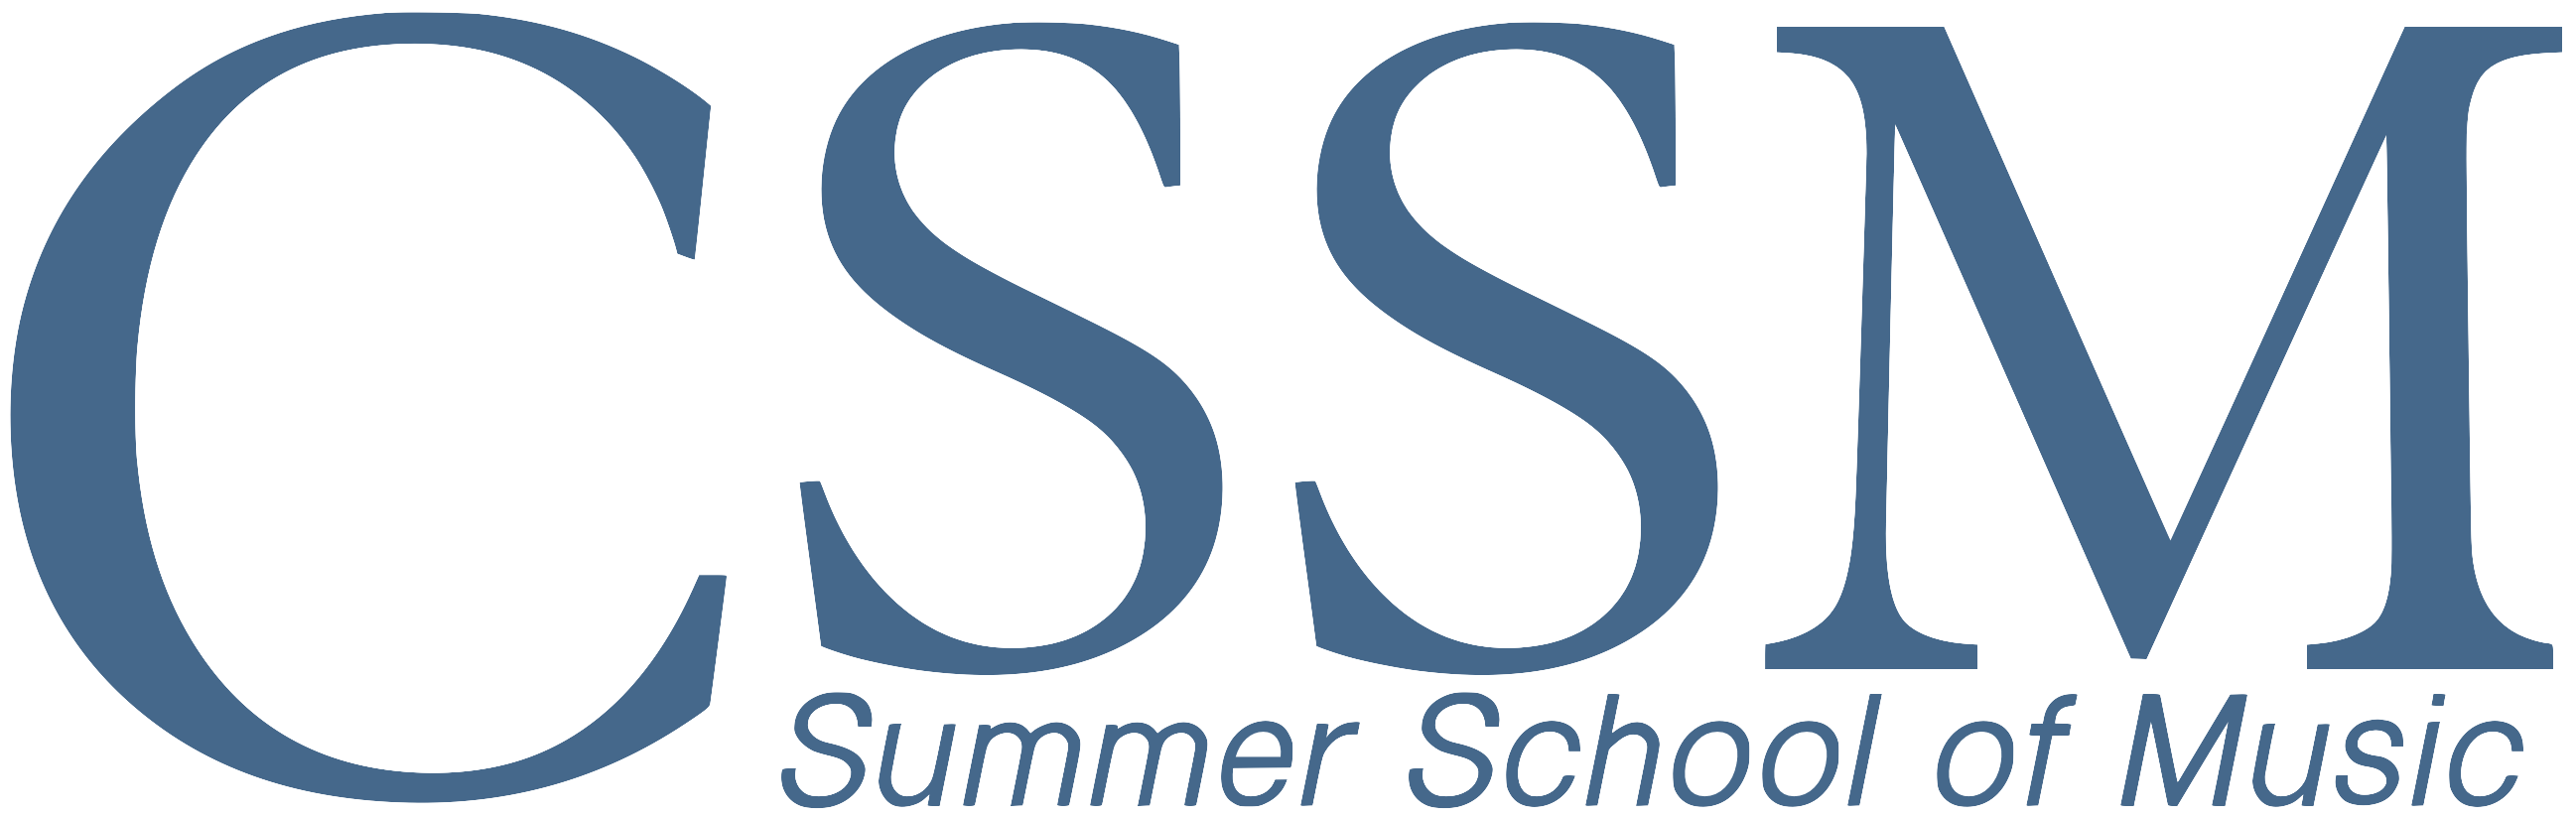 CSSM Summer School of Music